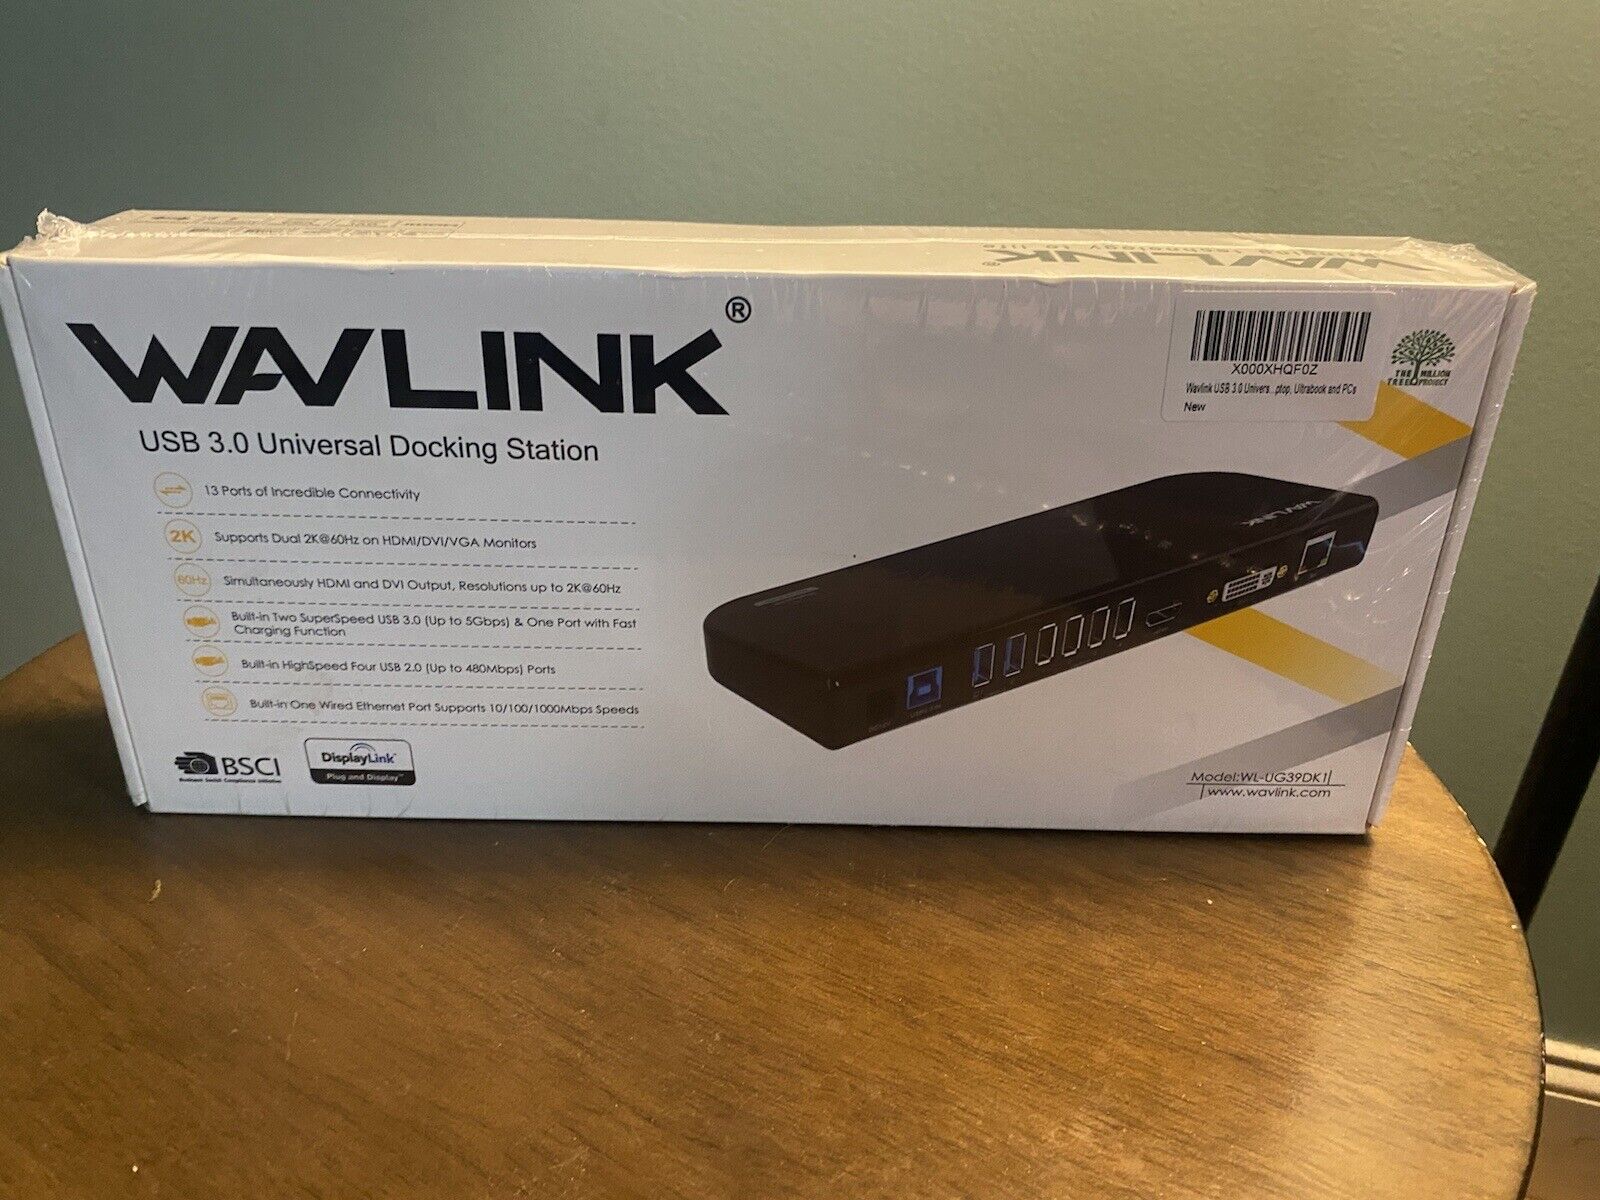 Wavlink WL-UG39DK1 Dual 2K USB 3.0 Universal Docking Station